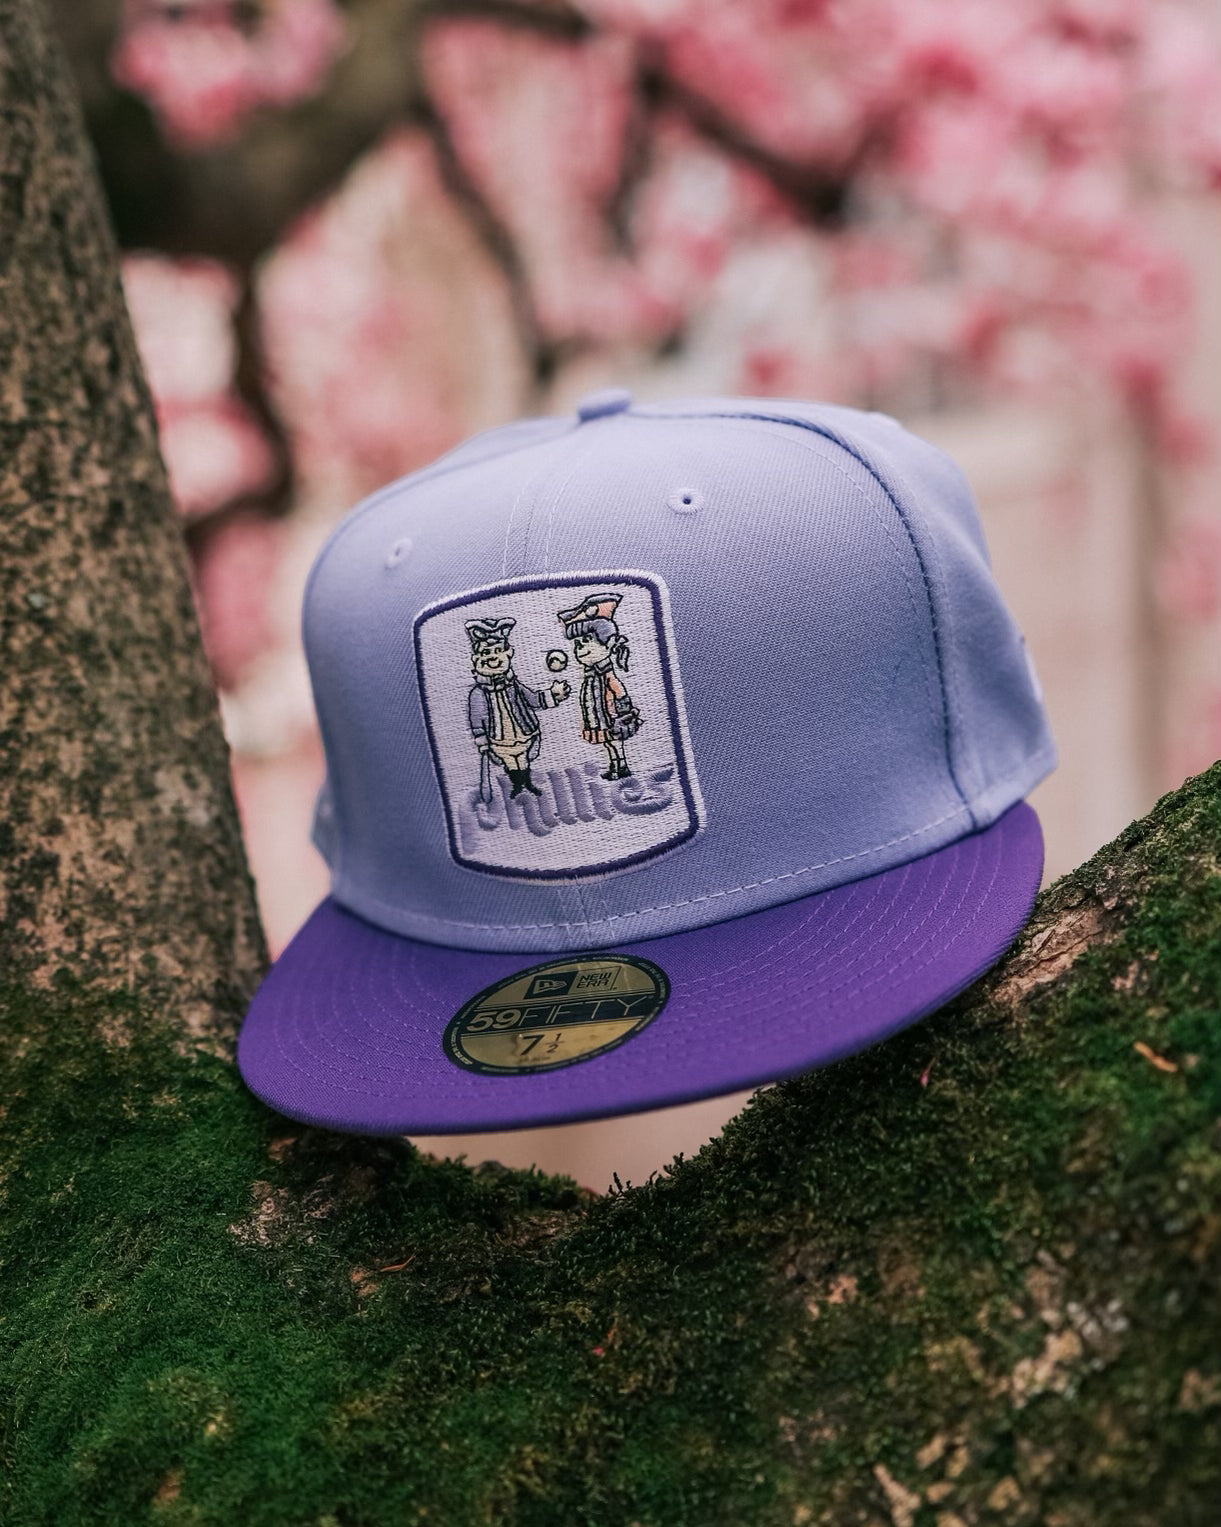 New Era Hat - Philadelphia Phillies - Lilac / Purple - 7 3/8 / Lilac /  Purple